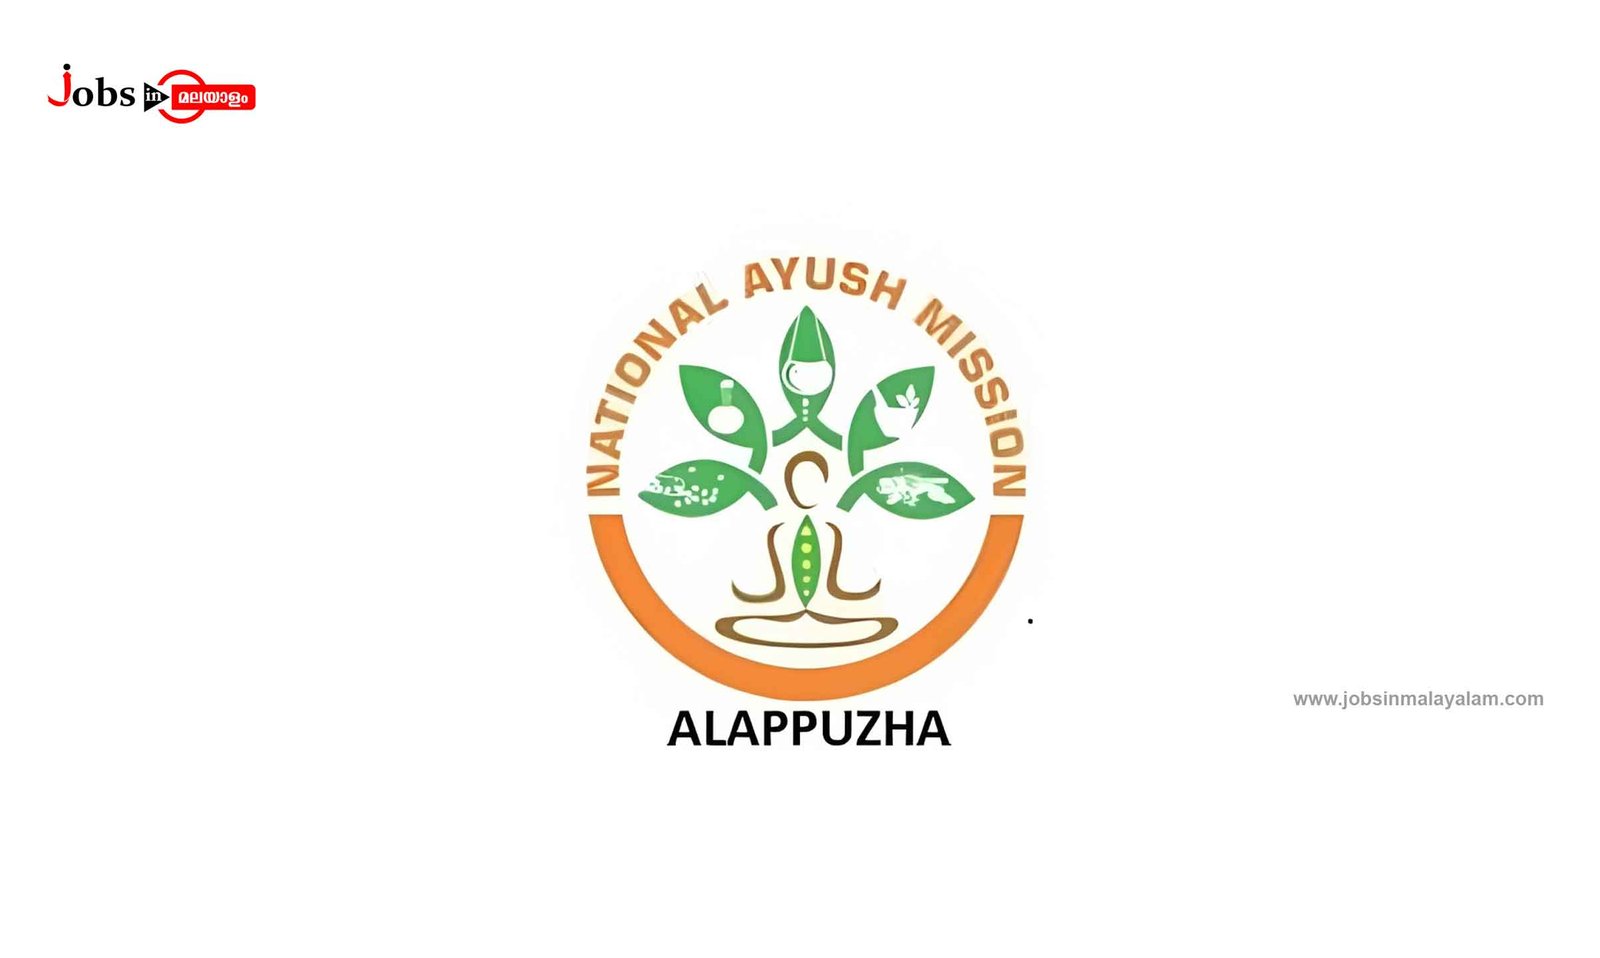 National AYUSH Mission Alappuzha